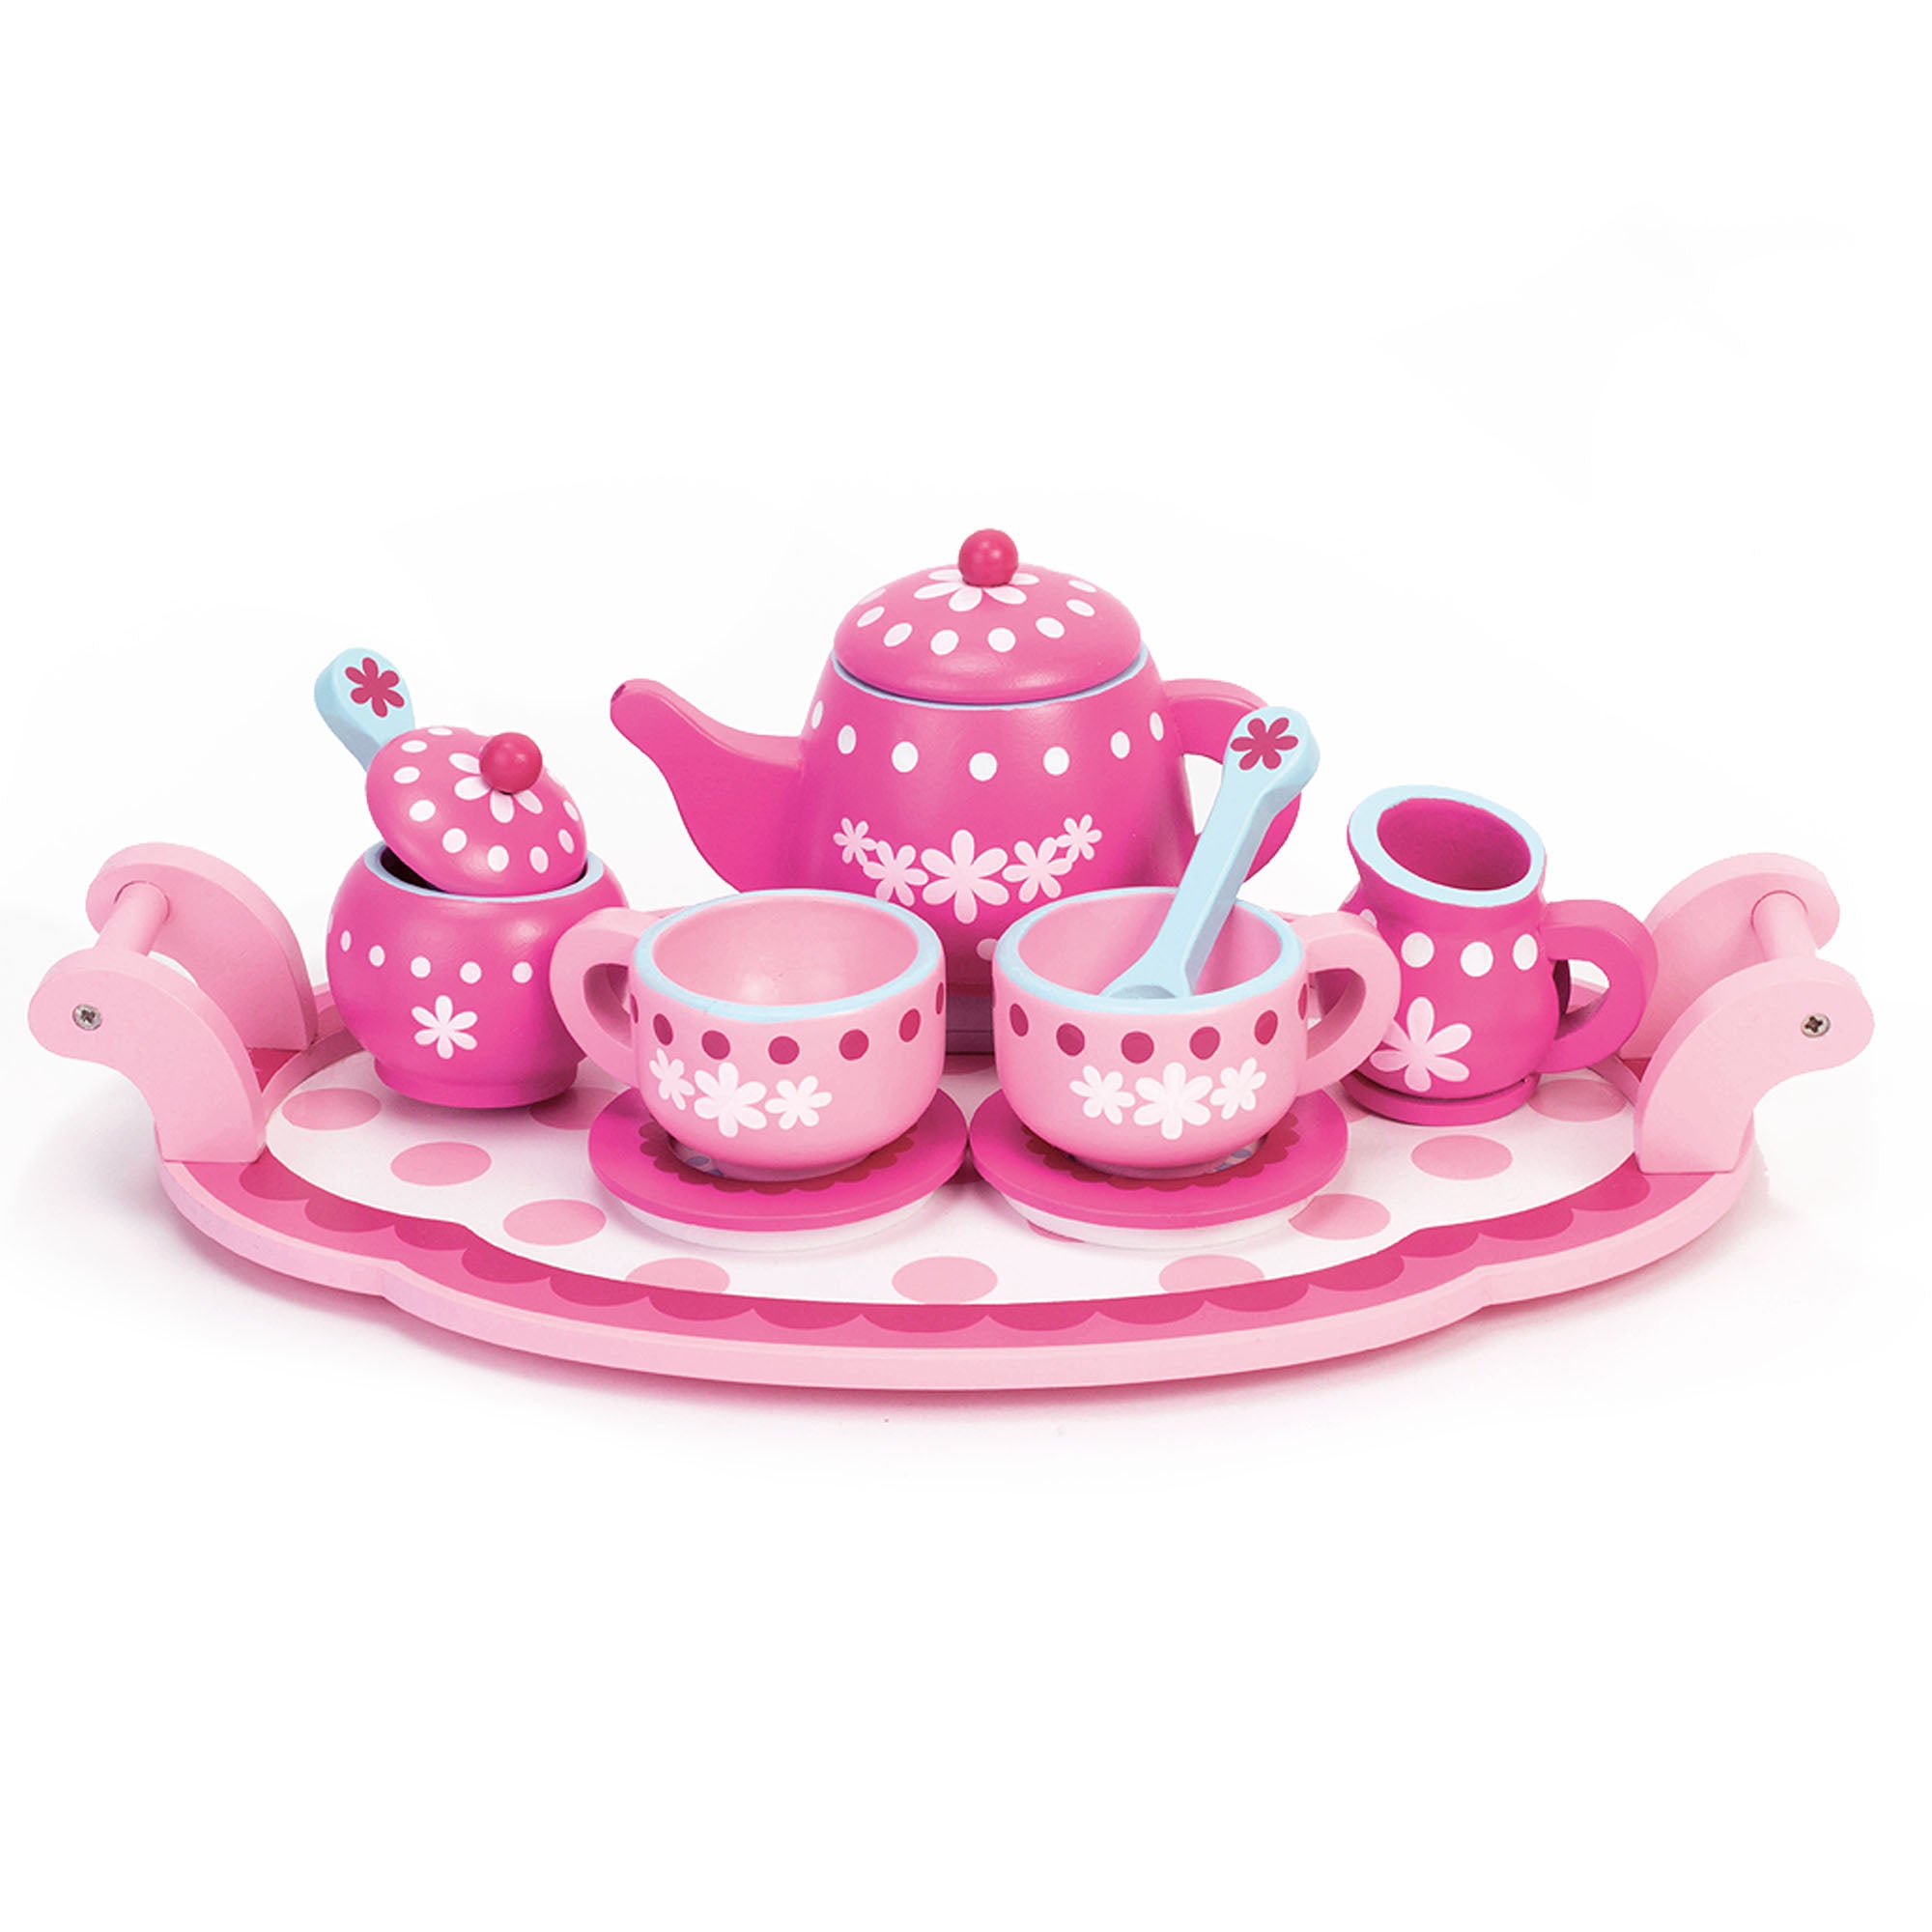 Sophia's 10 Piece Wooden Tea Party Set, Pink